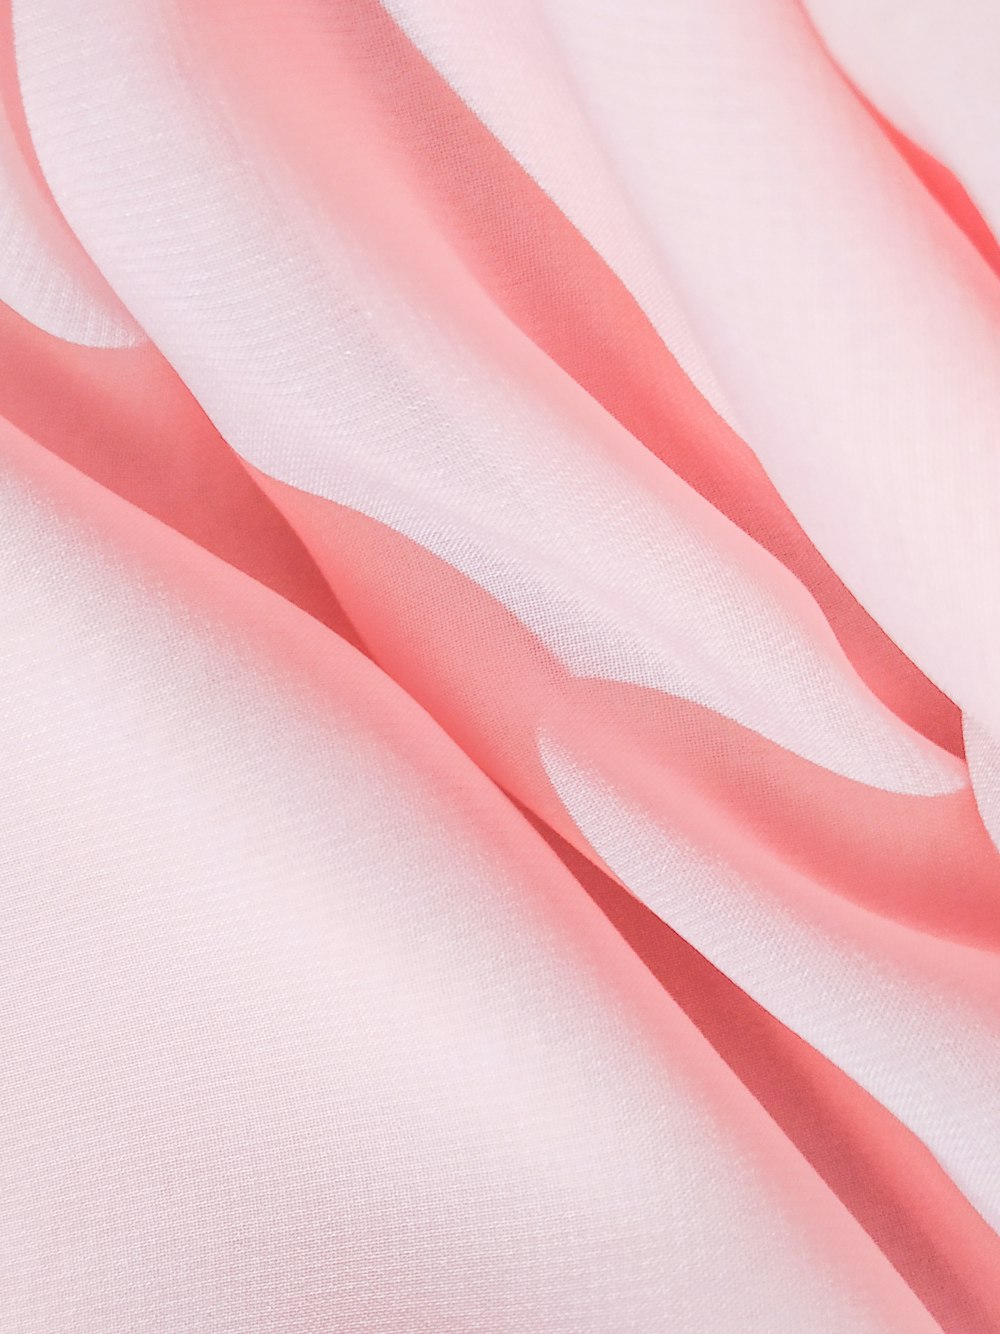 tessuto rosa in fotografia ravvicinata